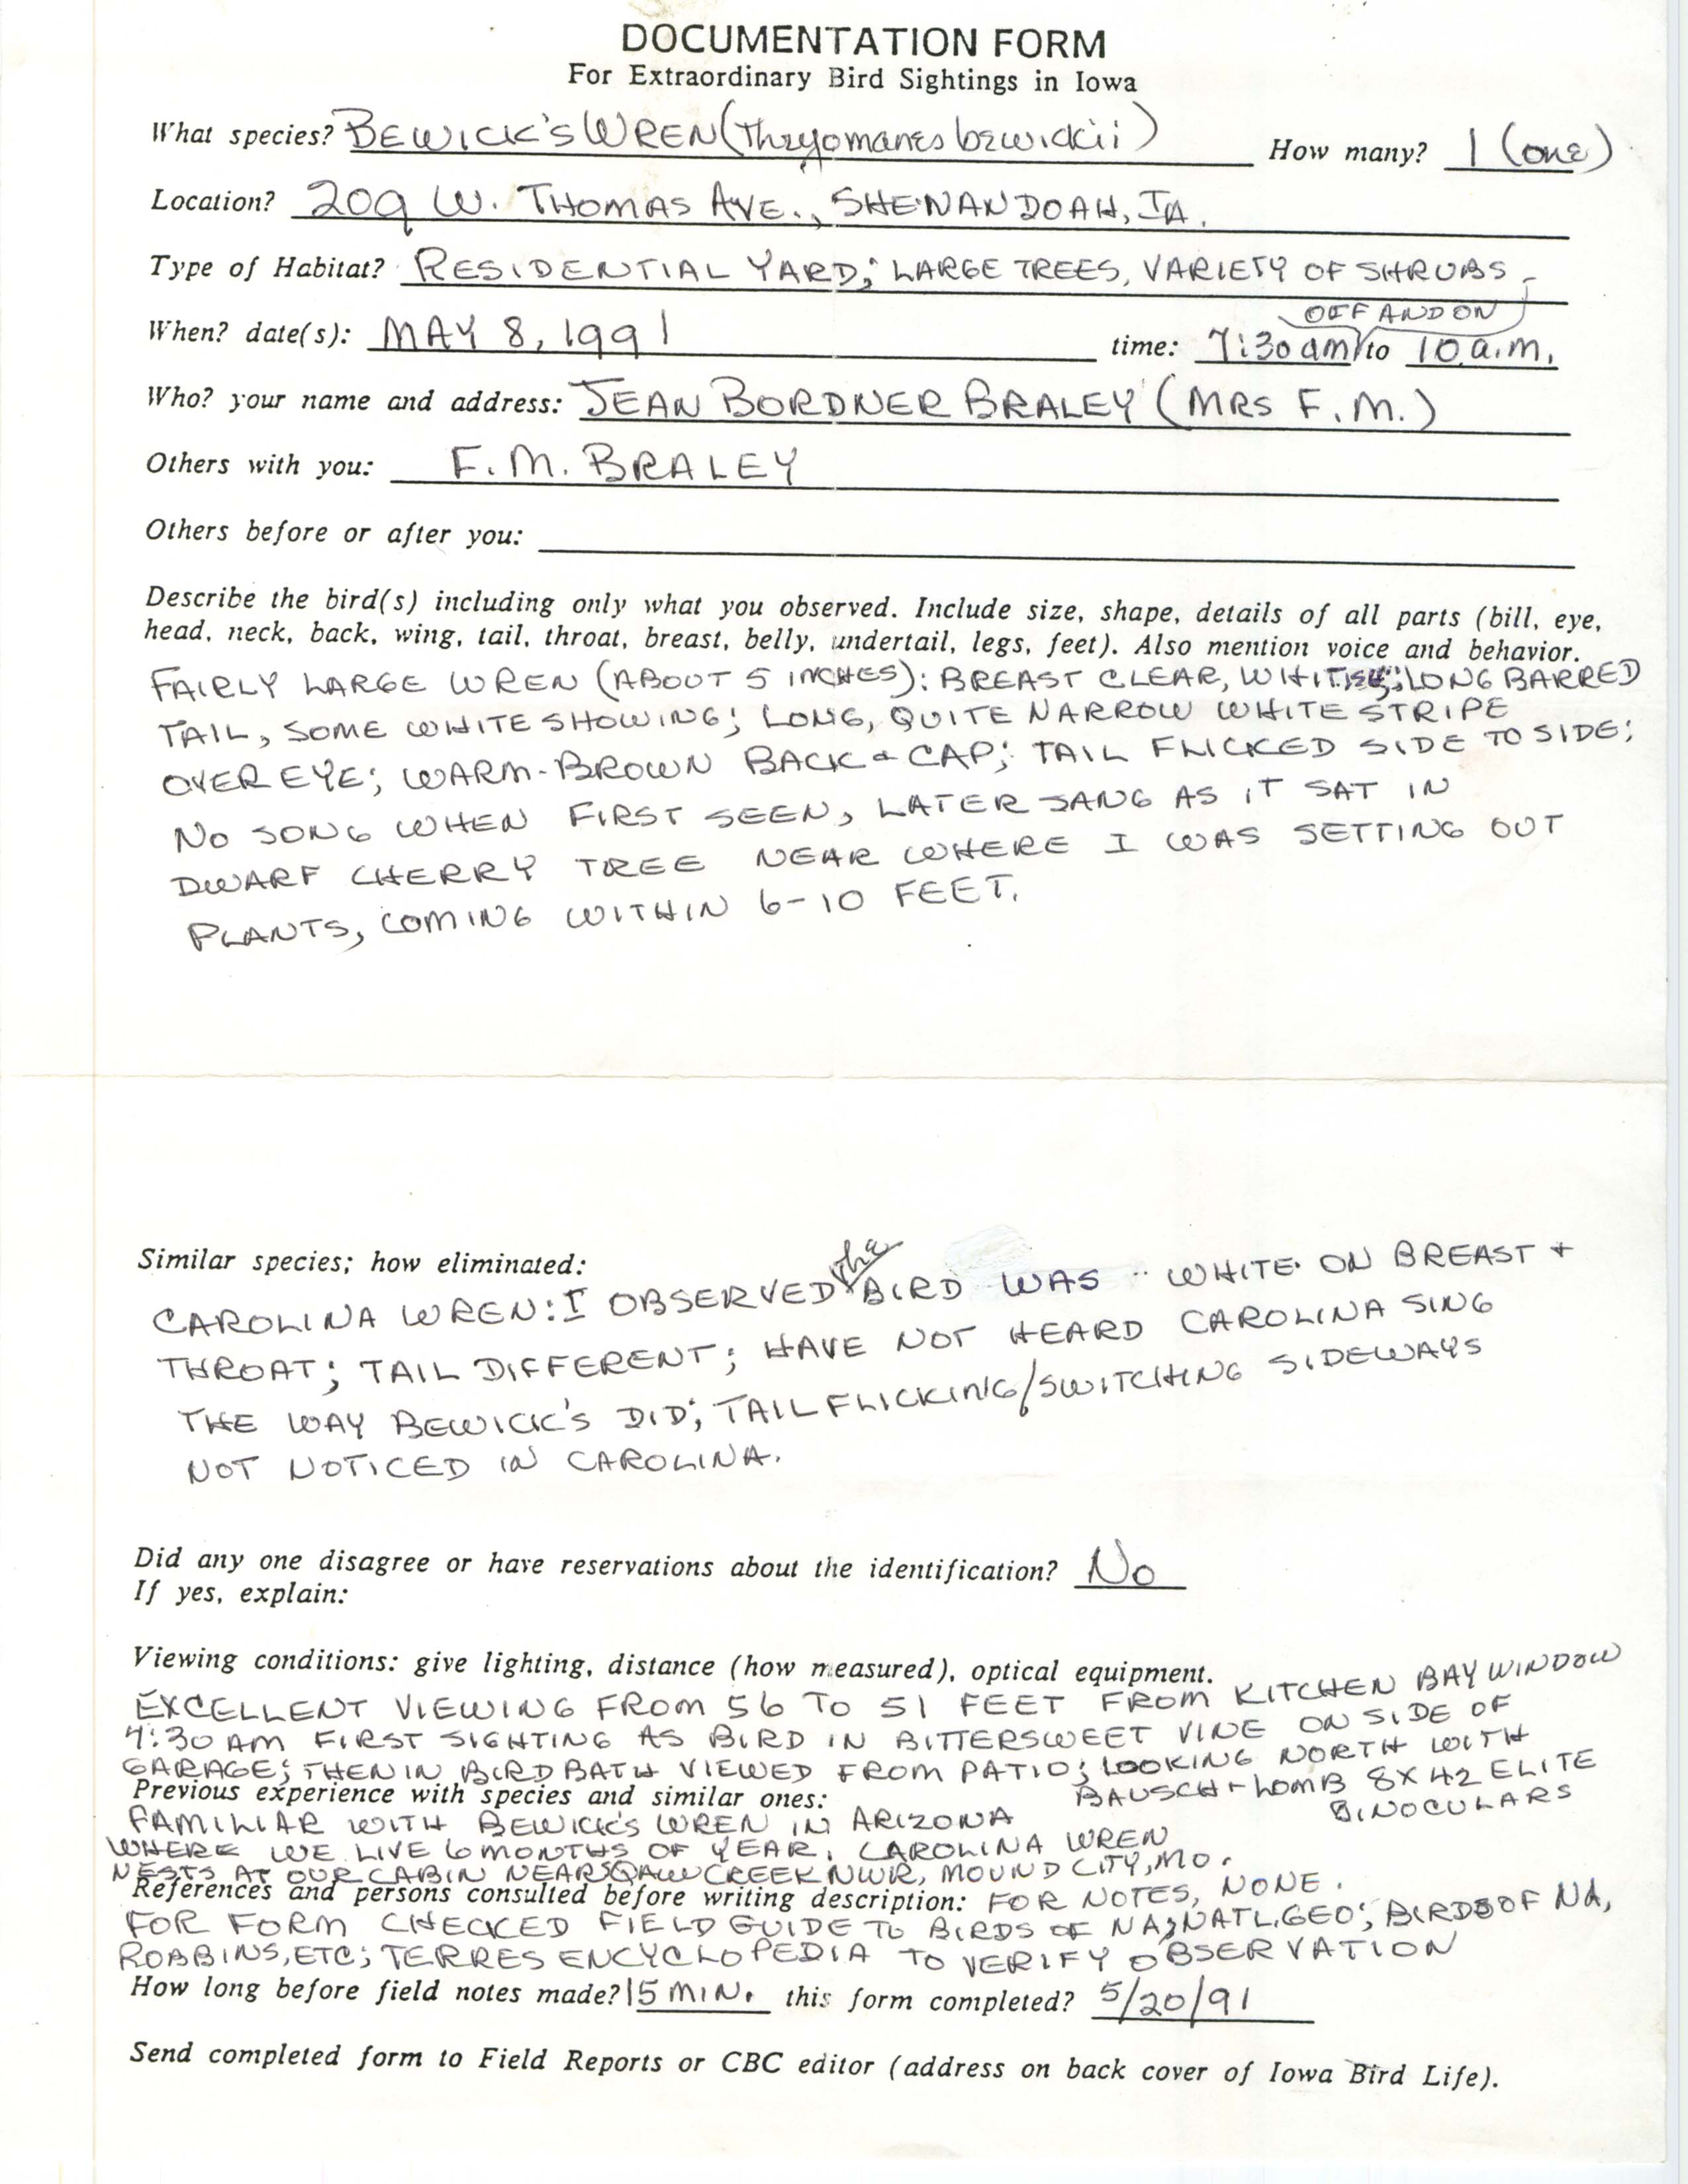 Rare bird documentation form for Bewick's Wren at Shenandoah, 1991